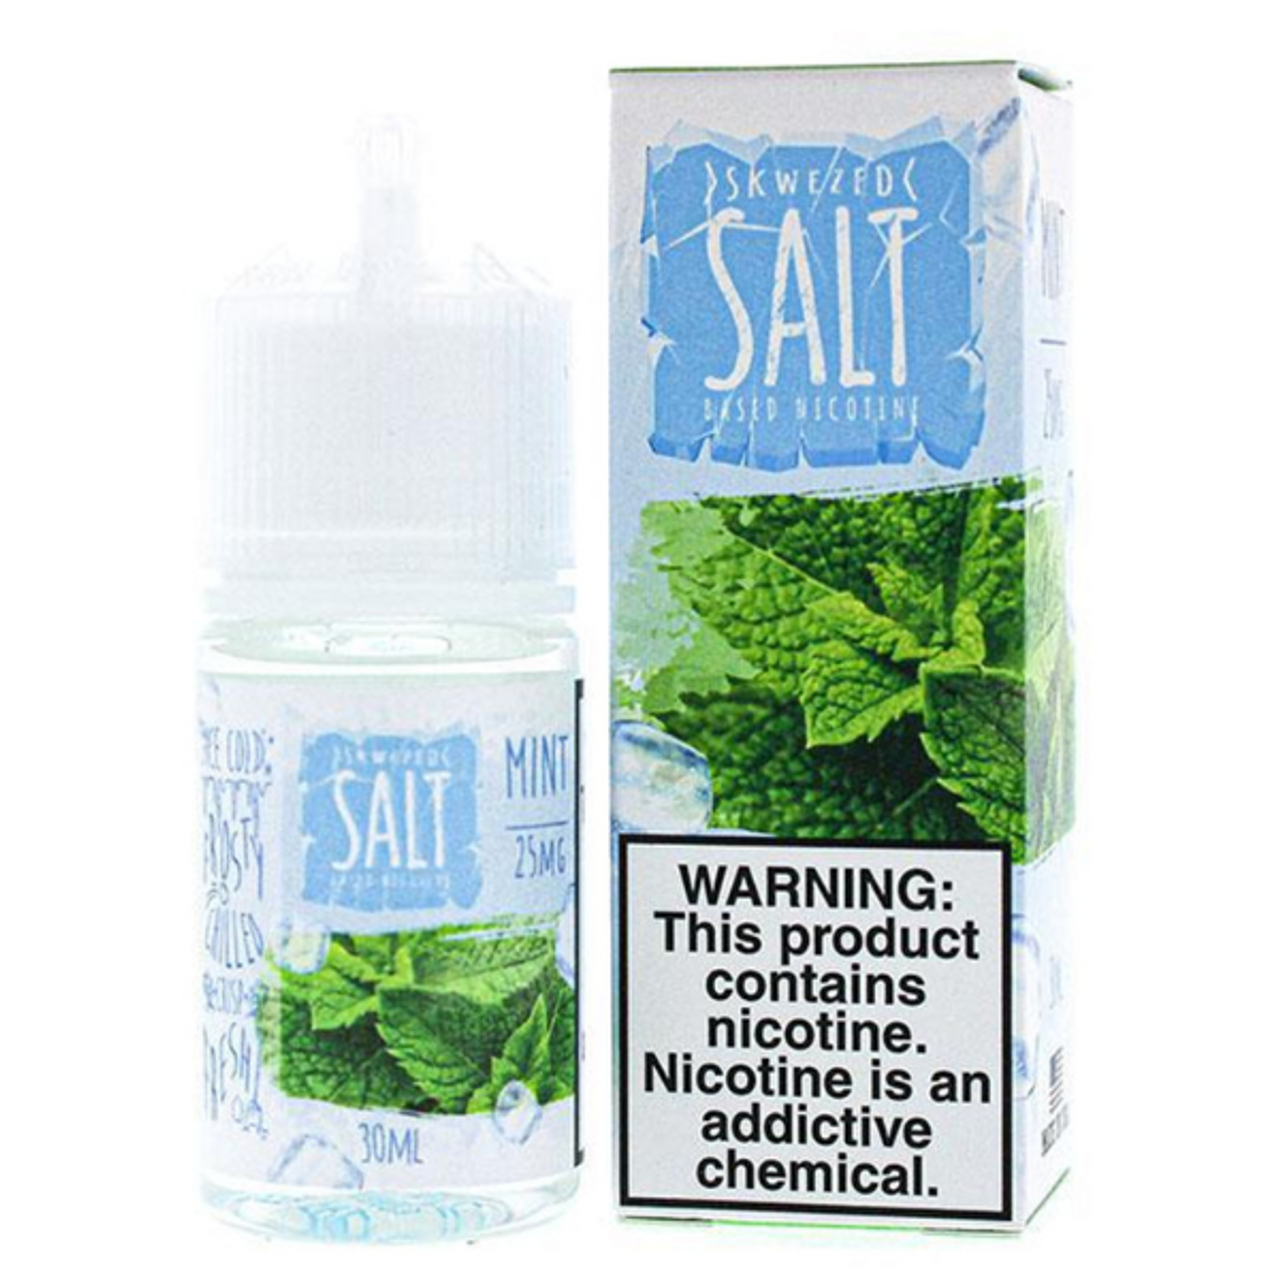 Skwezed Salt Series E-Liquid 30mL (Salt Nic) Mint Ice with Packaging